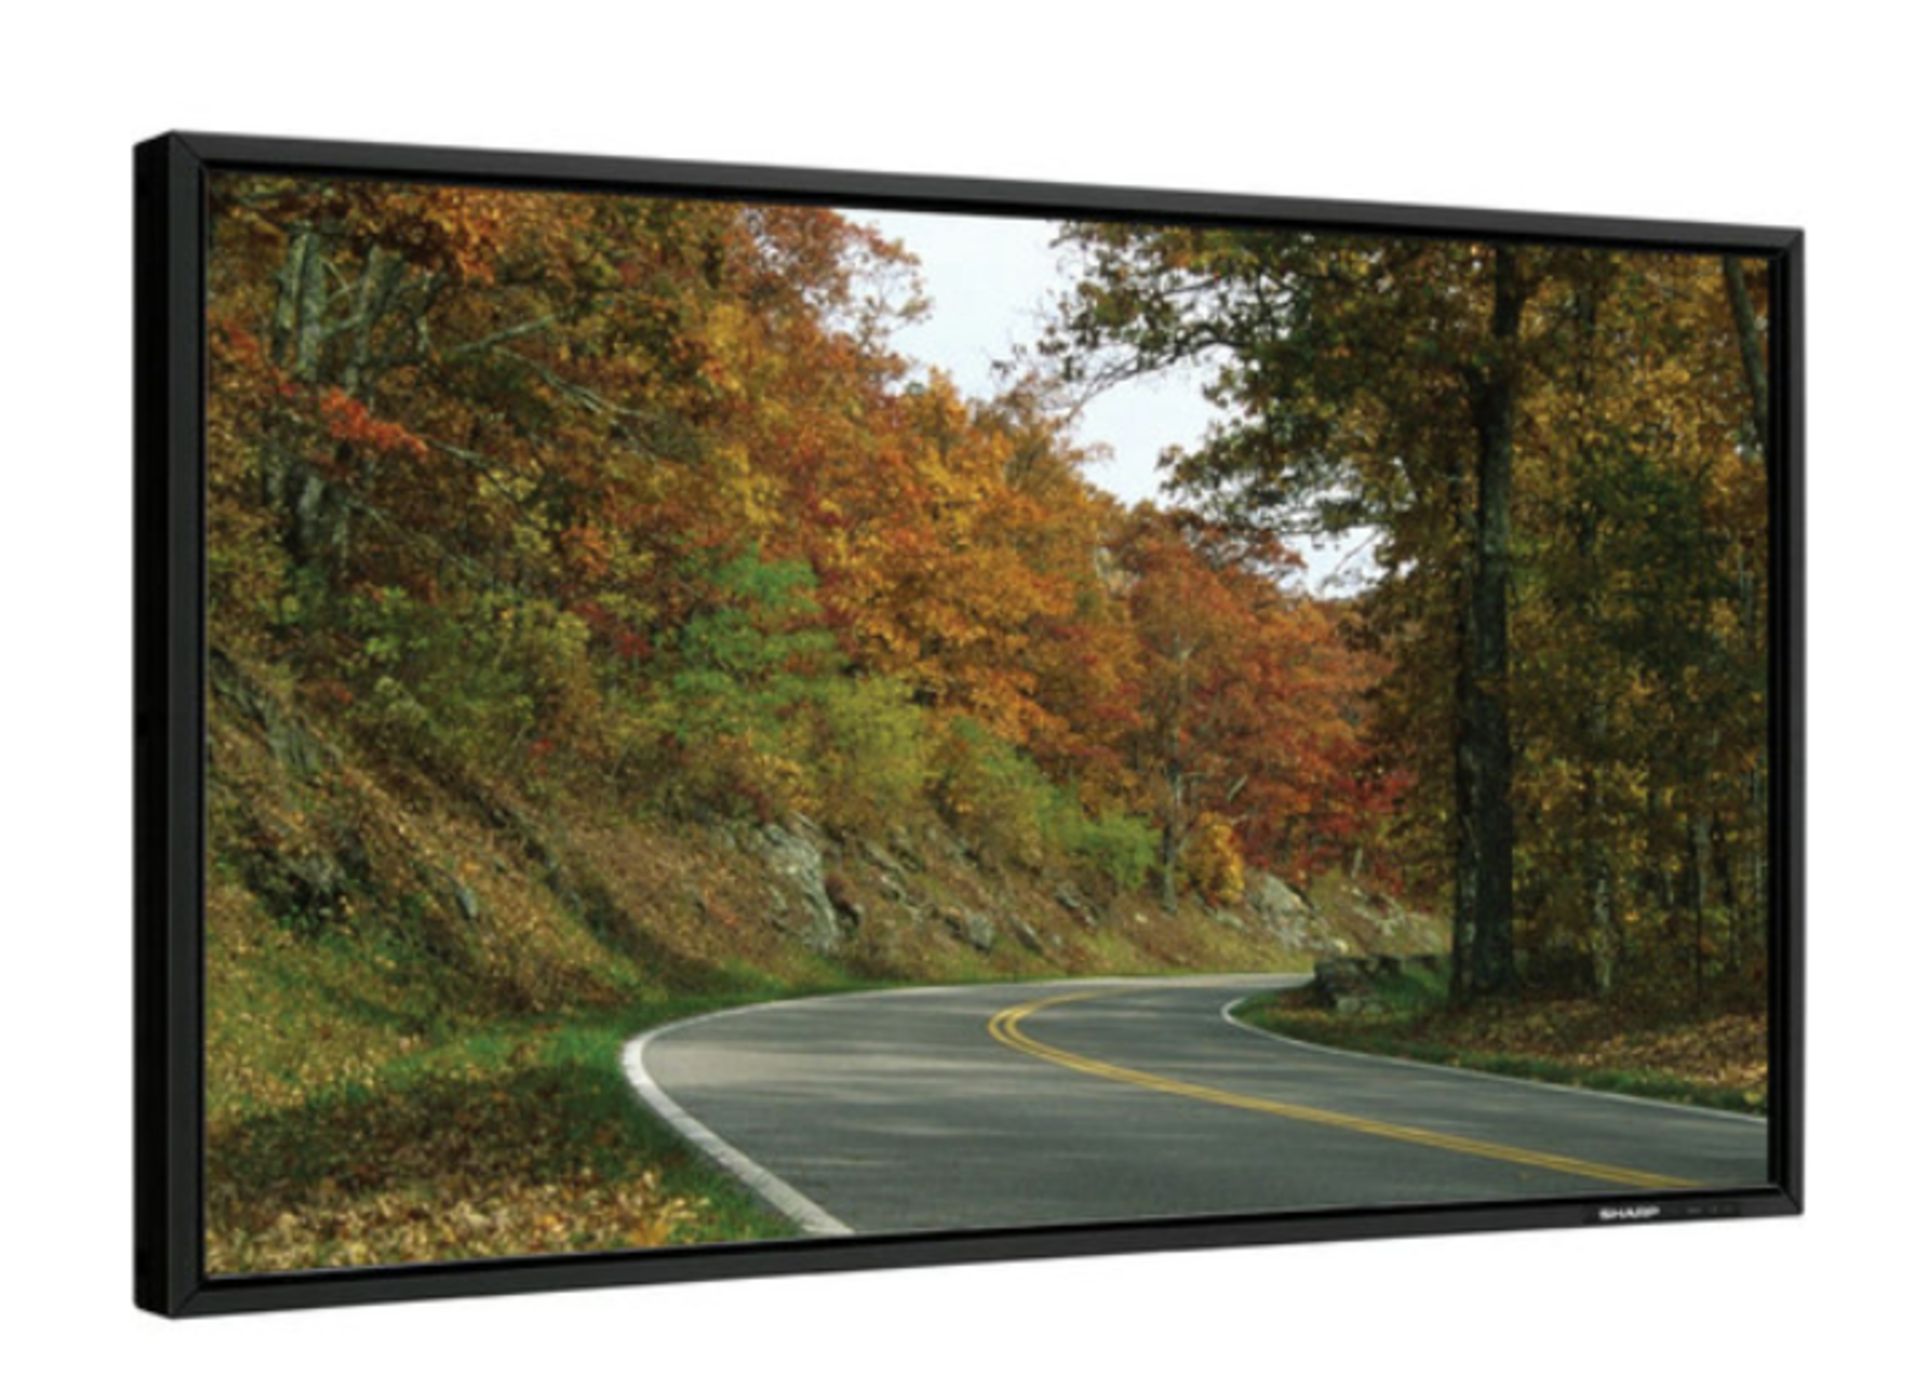 SHARP PN-E601 60" 1080P FULL COLOR LCD COMMERCIAL MONITOR